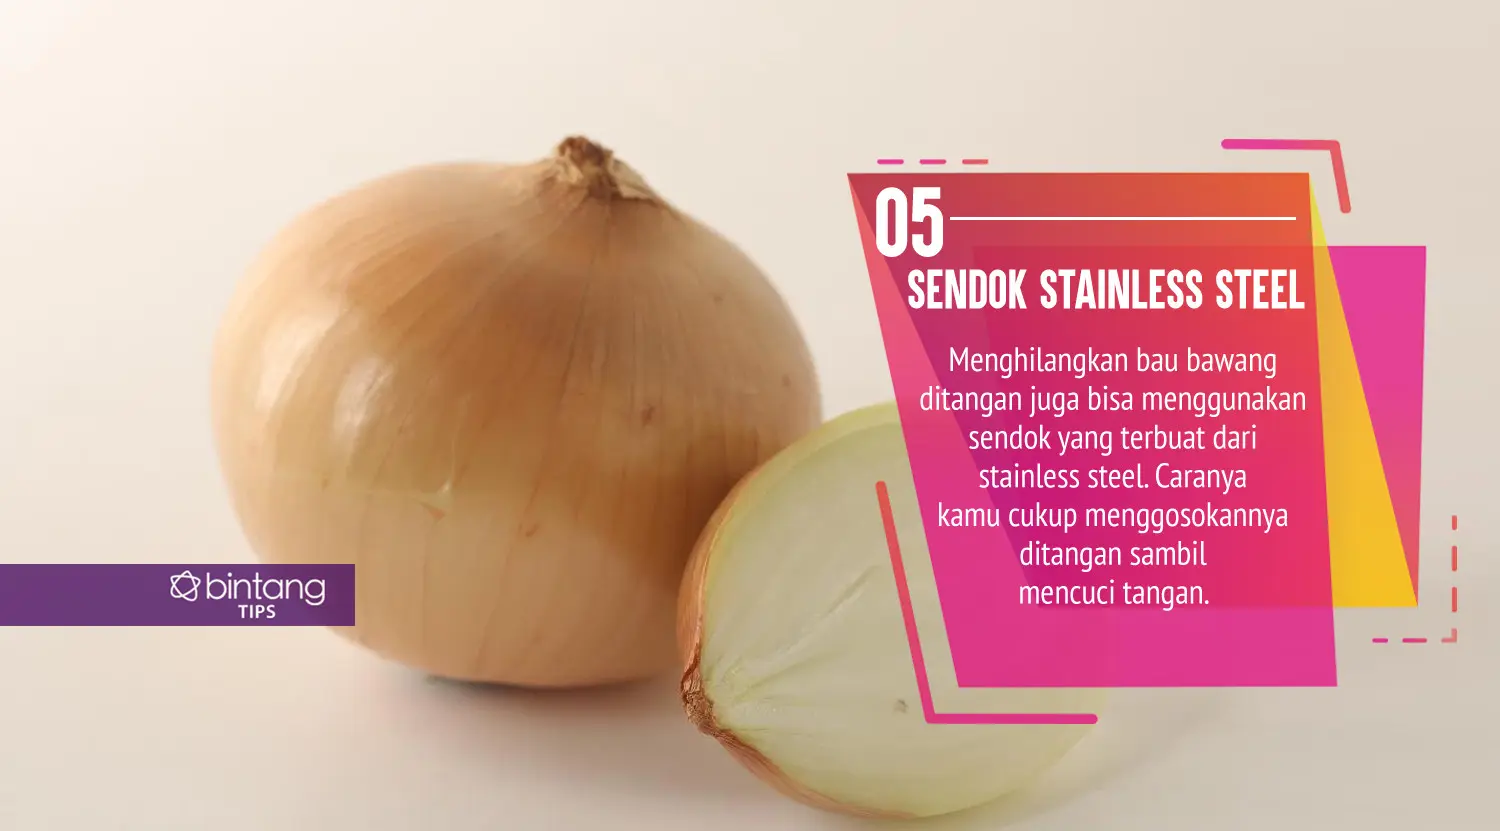 Cara hilangkan bau bawang di tangan. (Foto: Daniel Kampua, Digital Imaging: Nurman Abdul Hakim/Bintang.com)